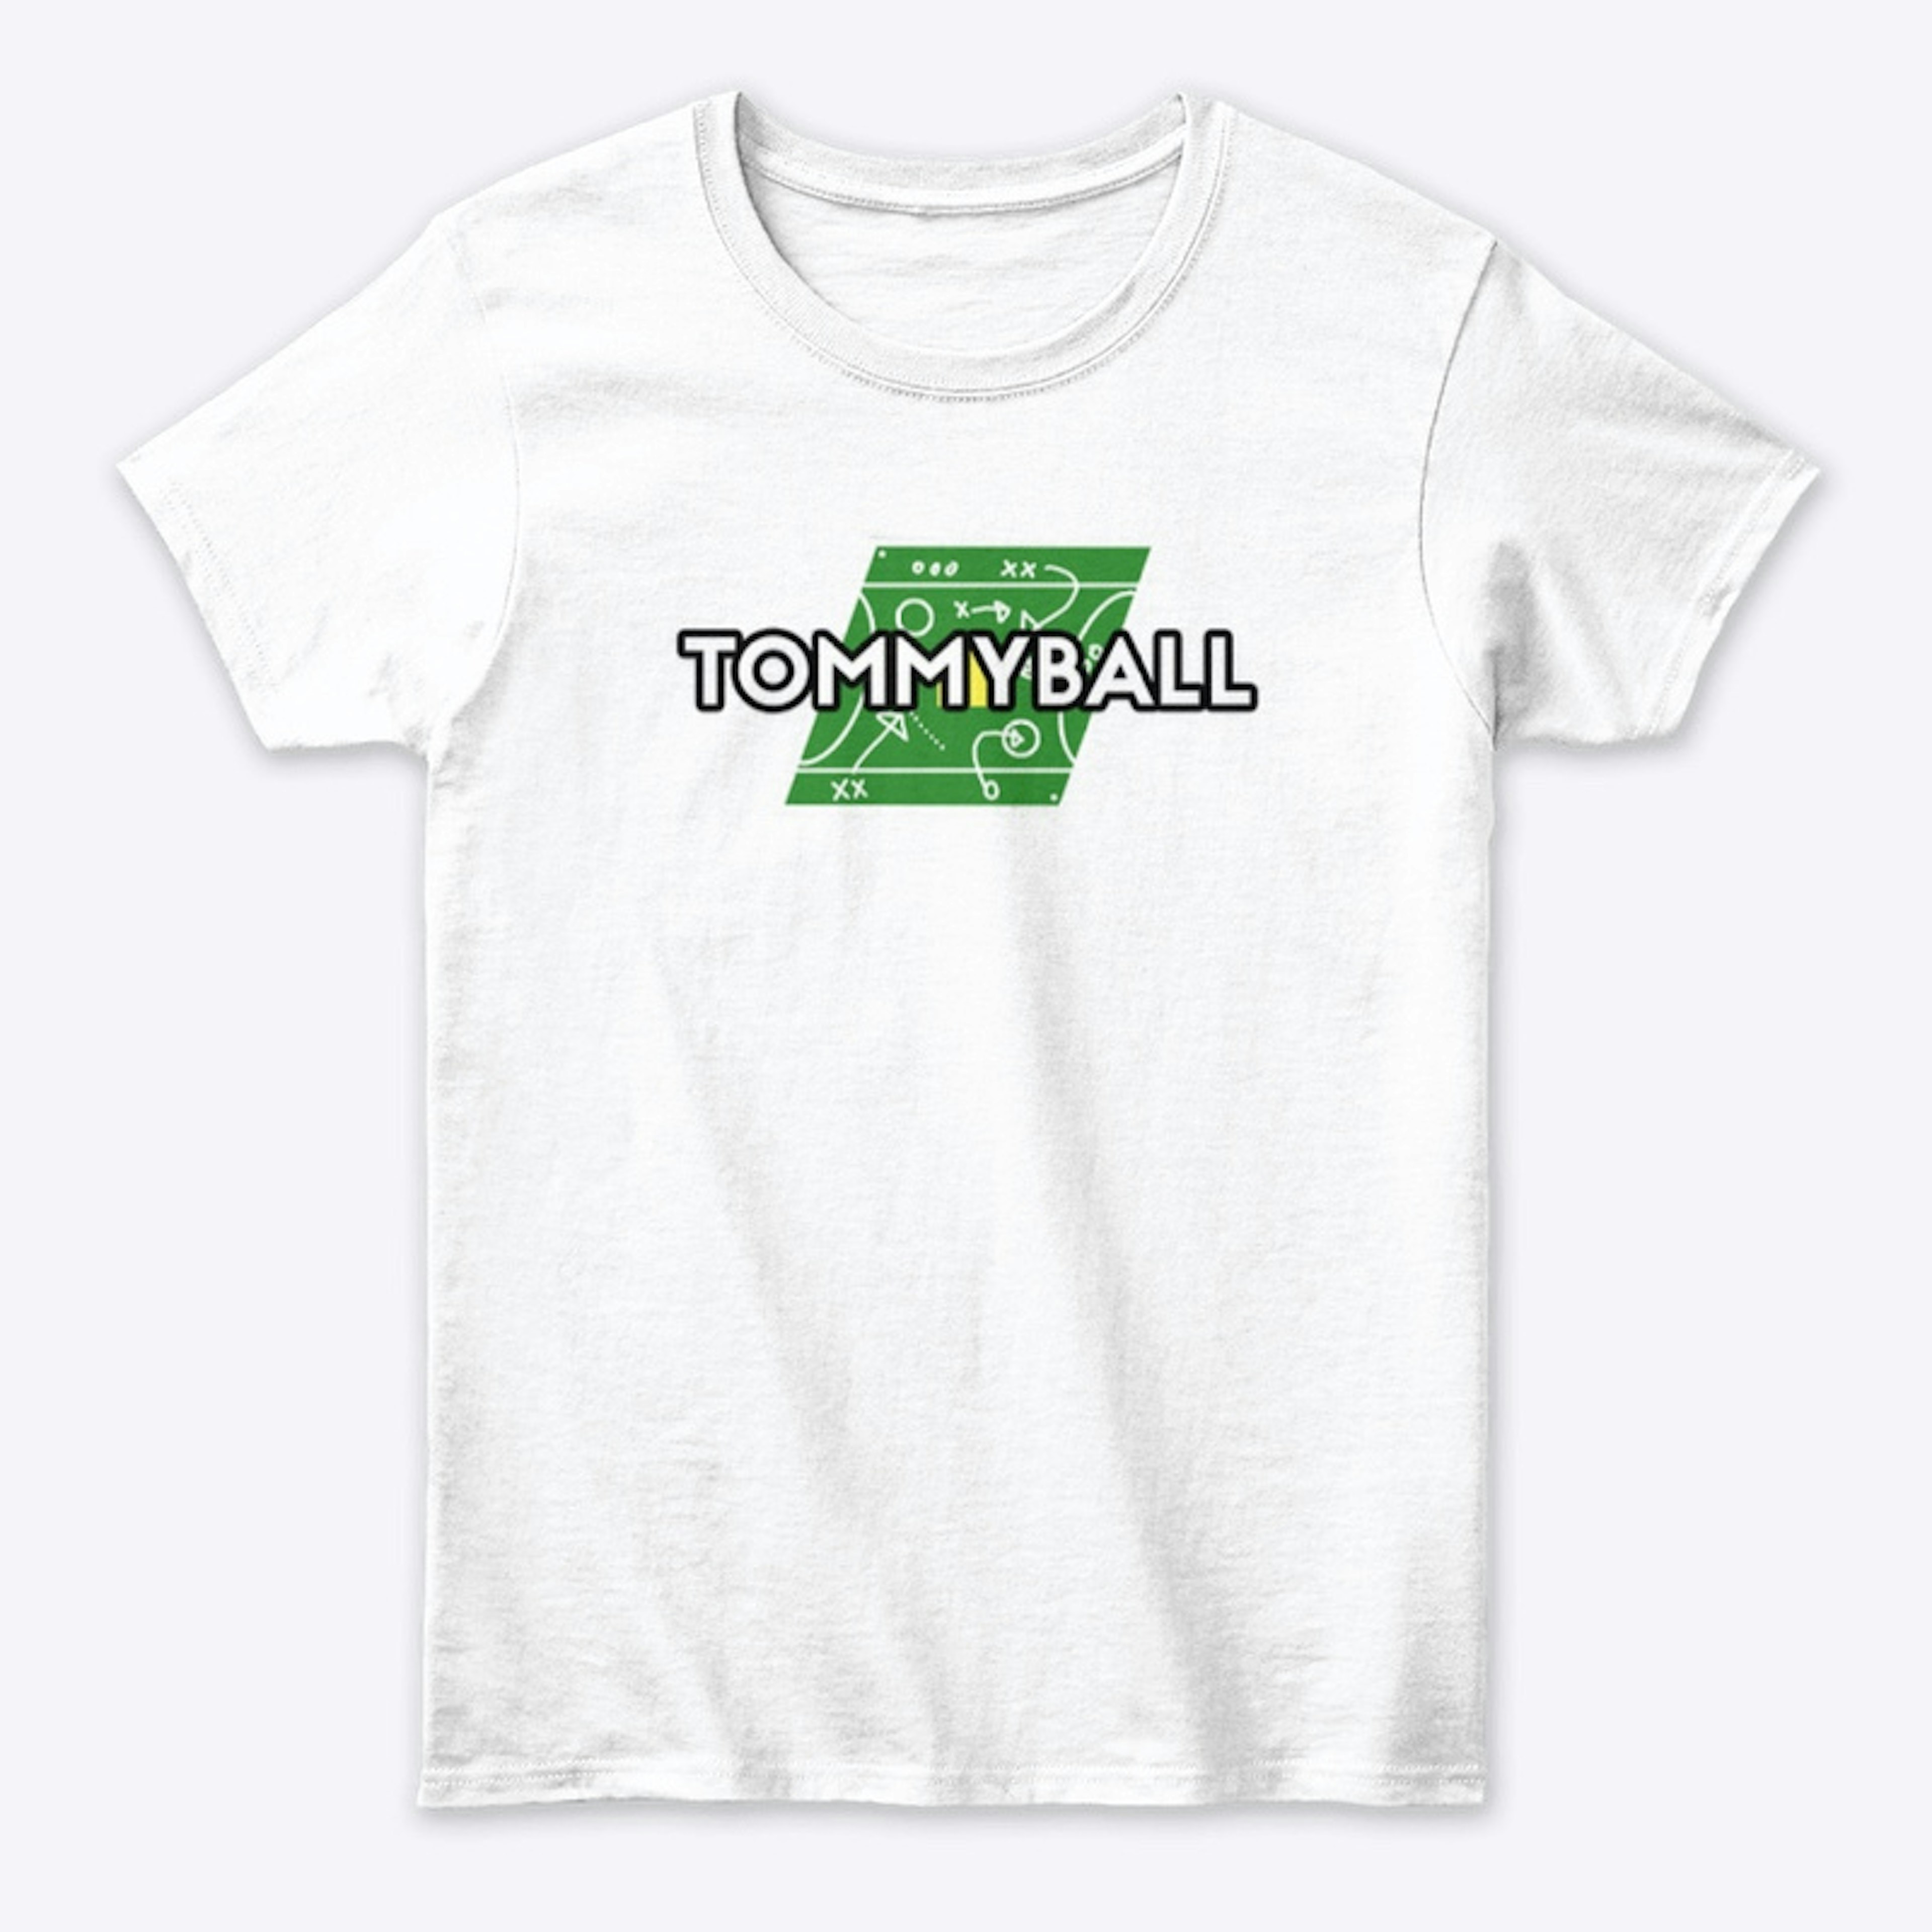 Tommyball (Rhombus Edition)